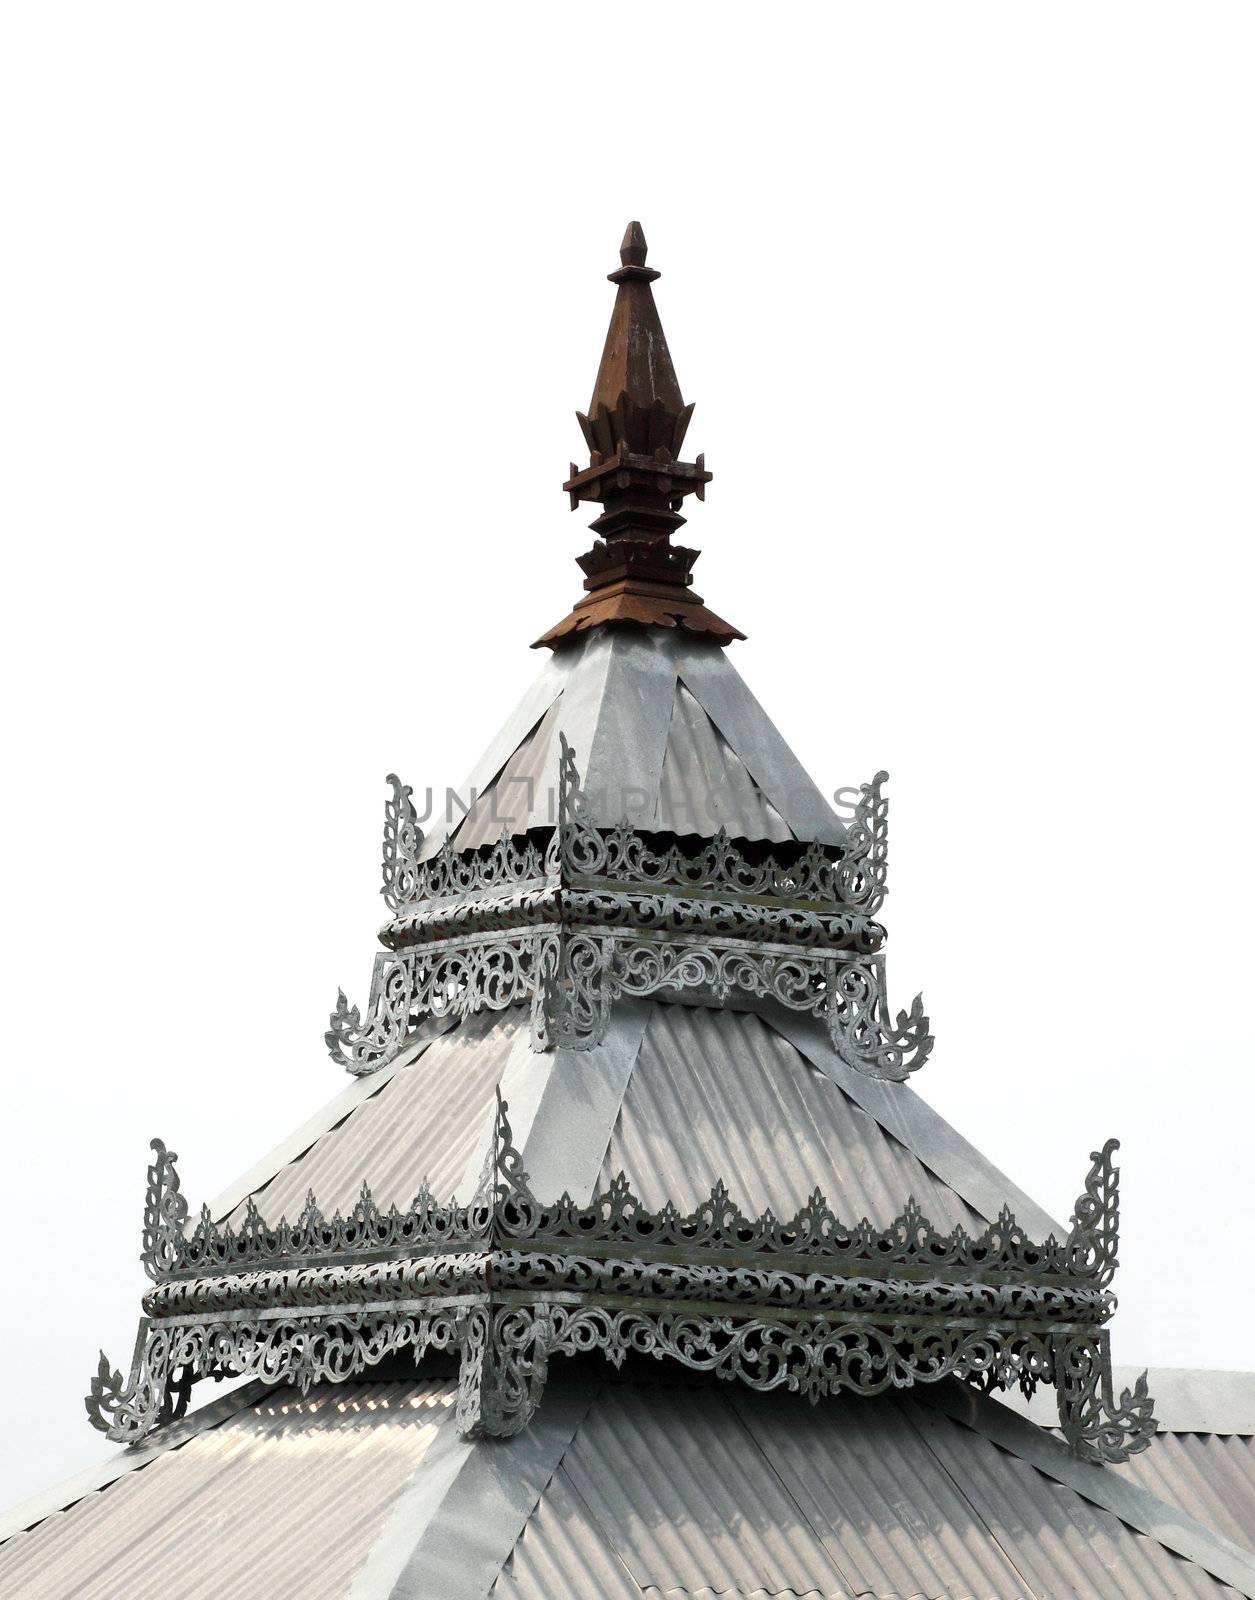 Thai roof texture by geargodz